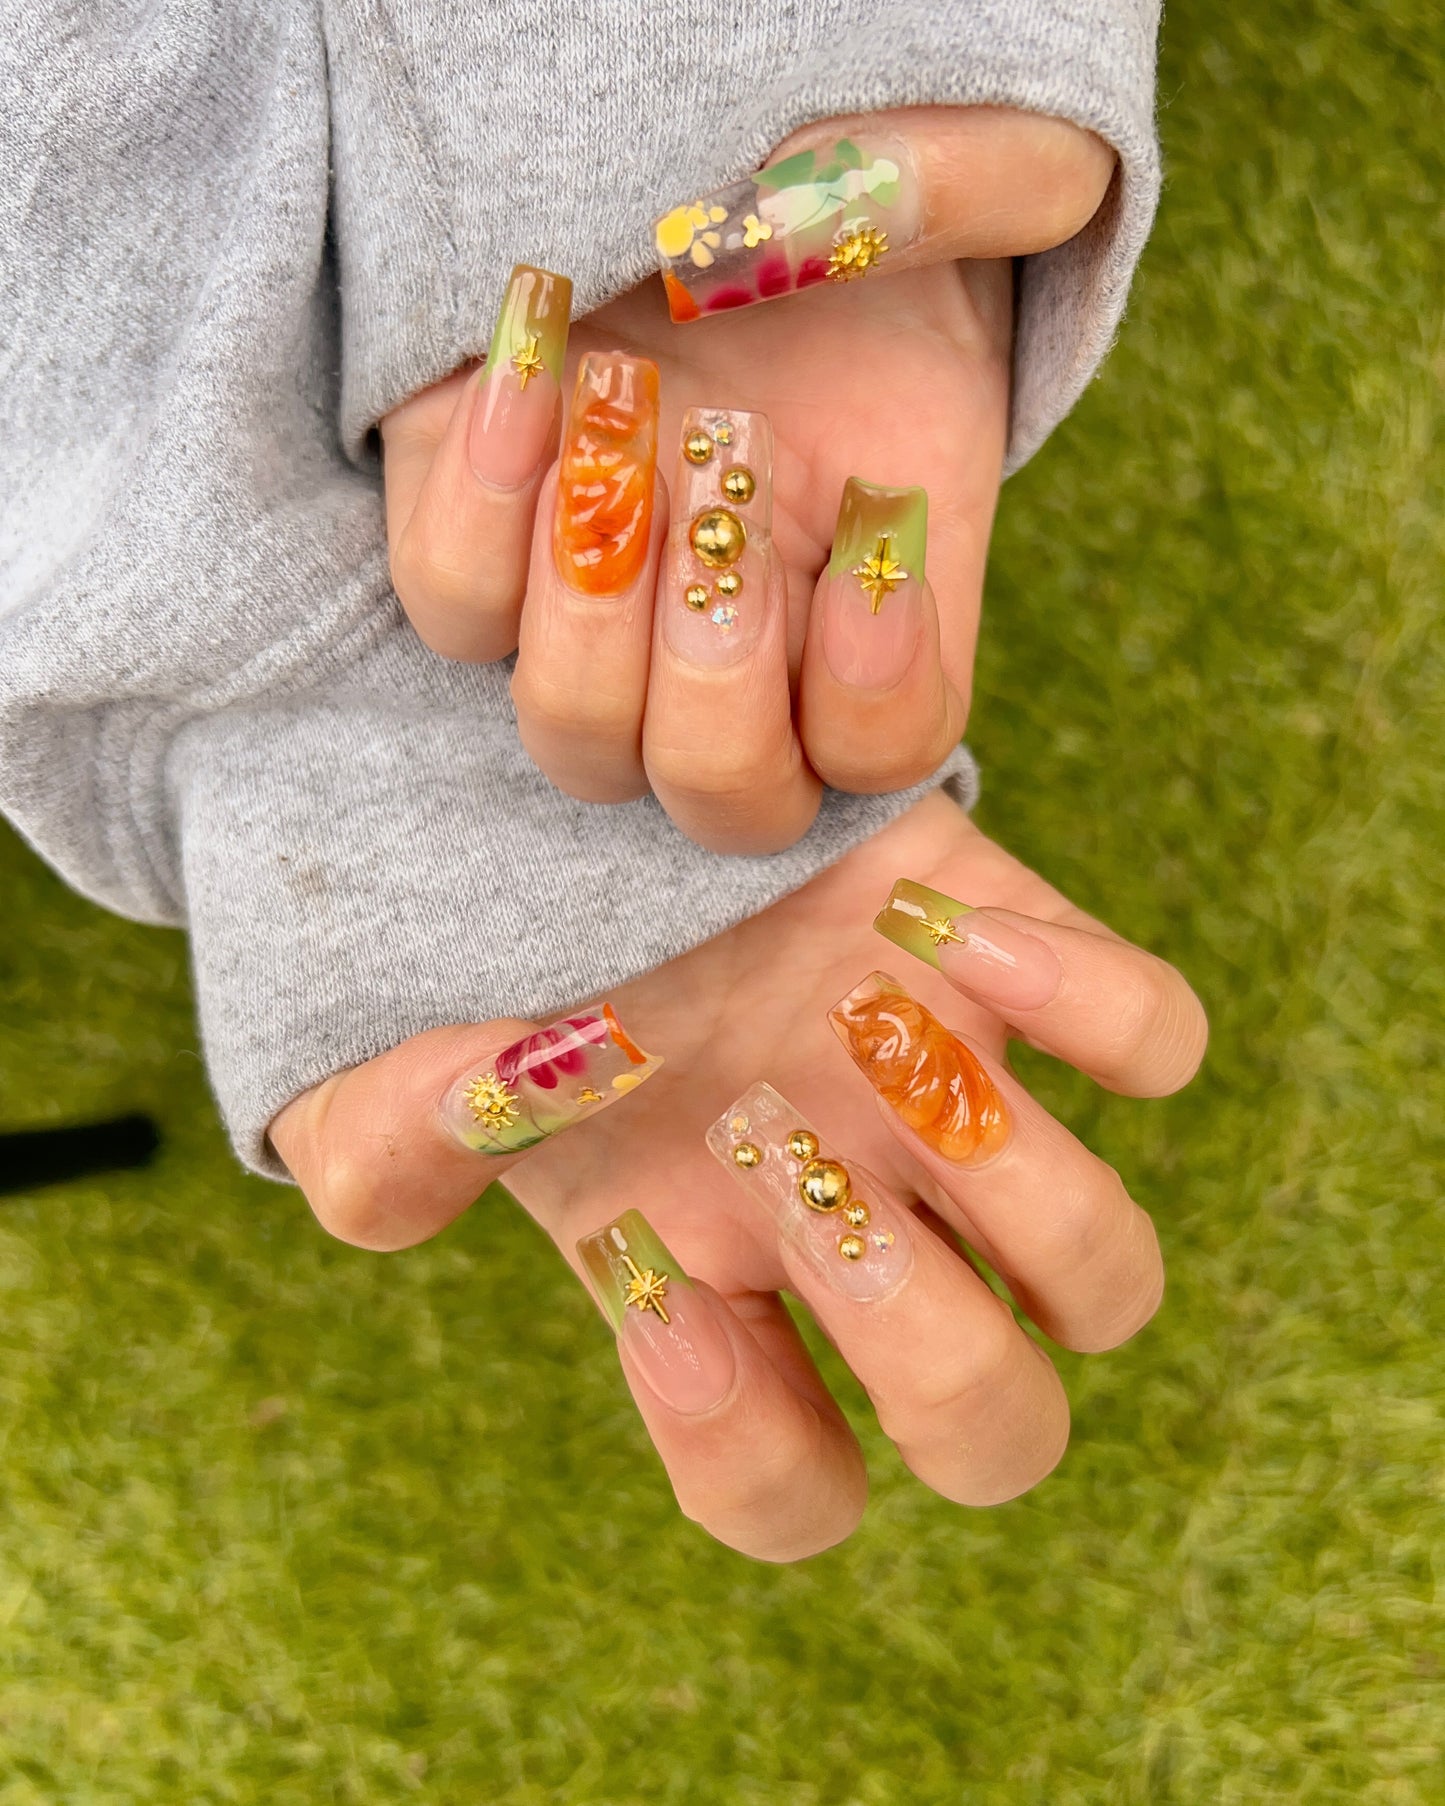 Blossom nails